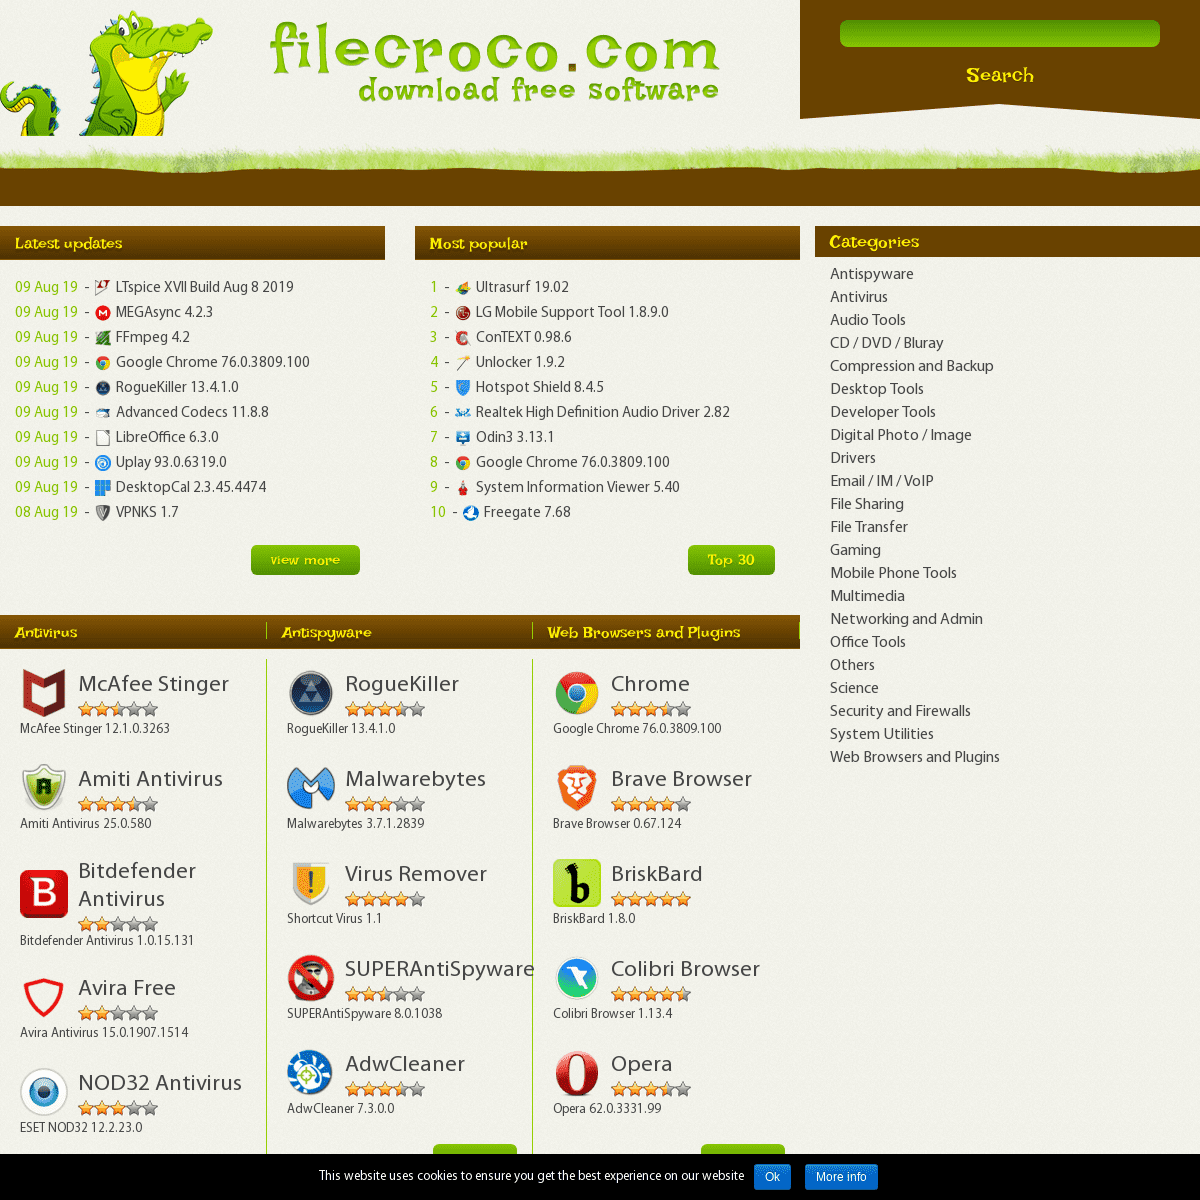 Download Free Software for Windows - FileCroco.com